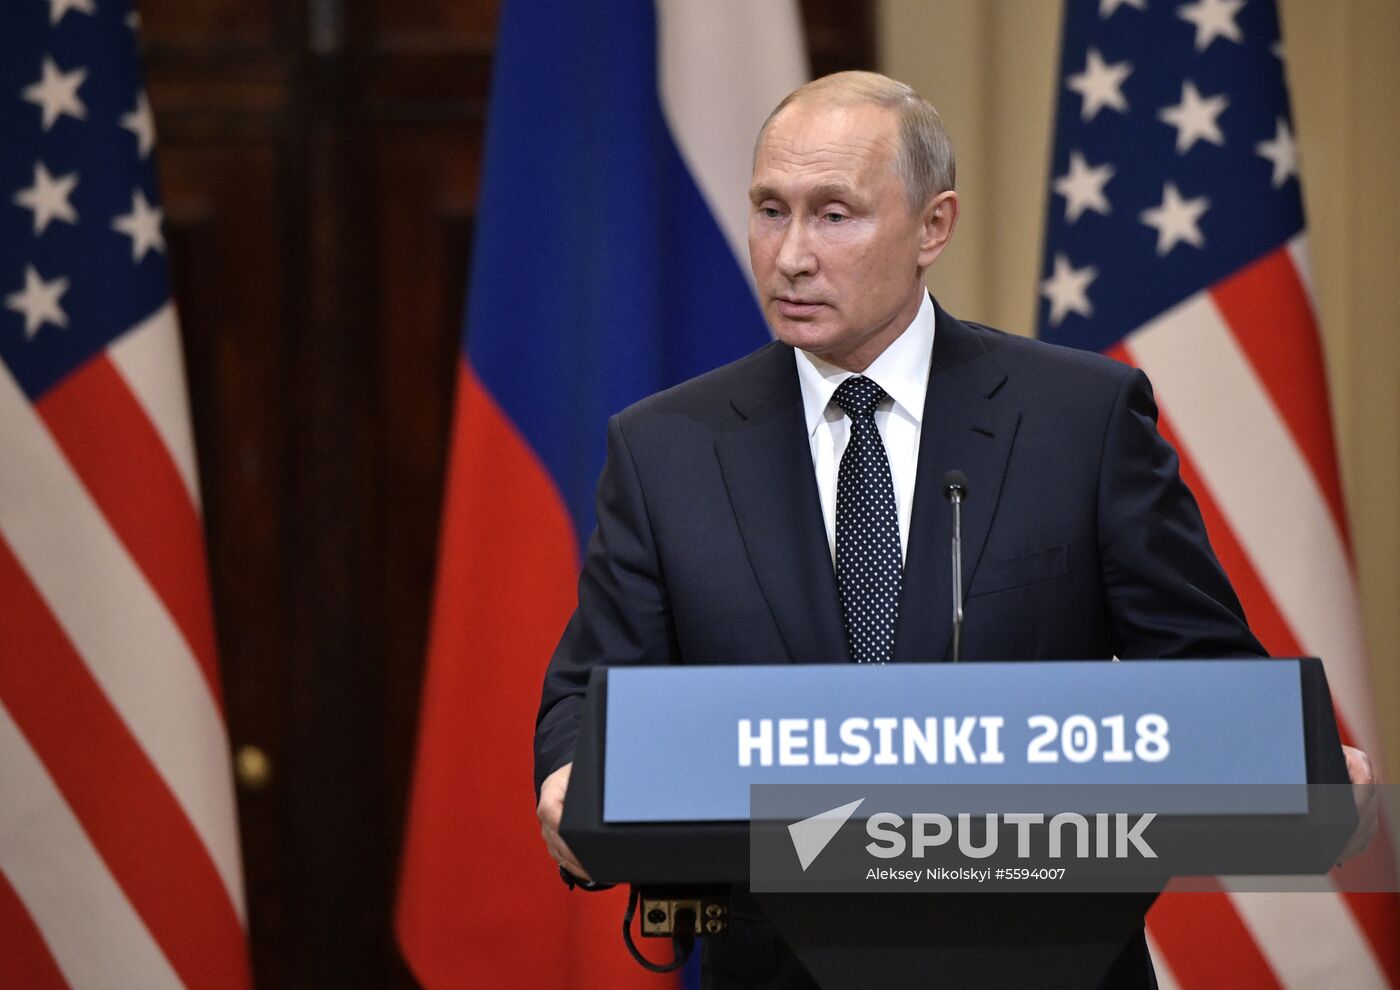 Russian President Vladimir Putin and US President Donald Trump meet in Helsinki